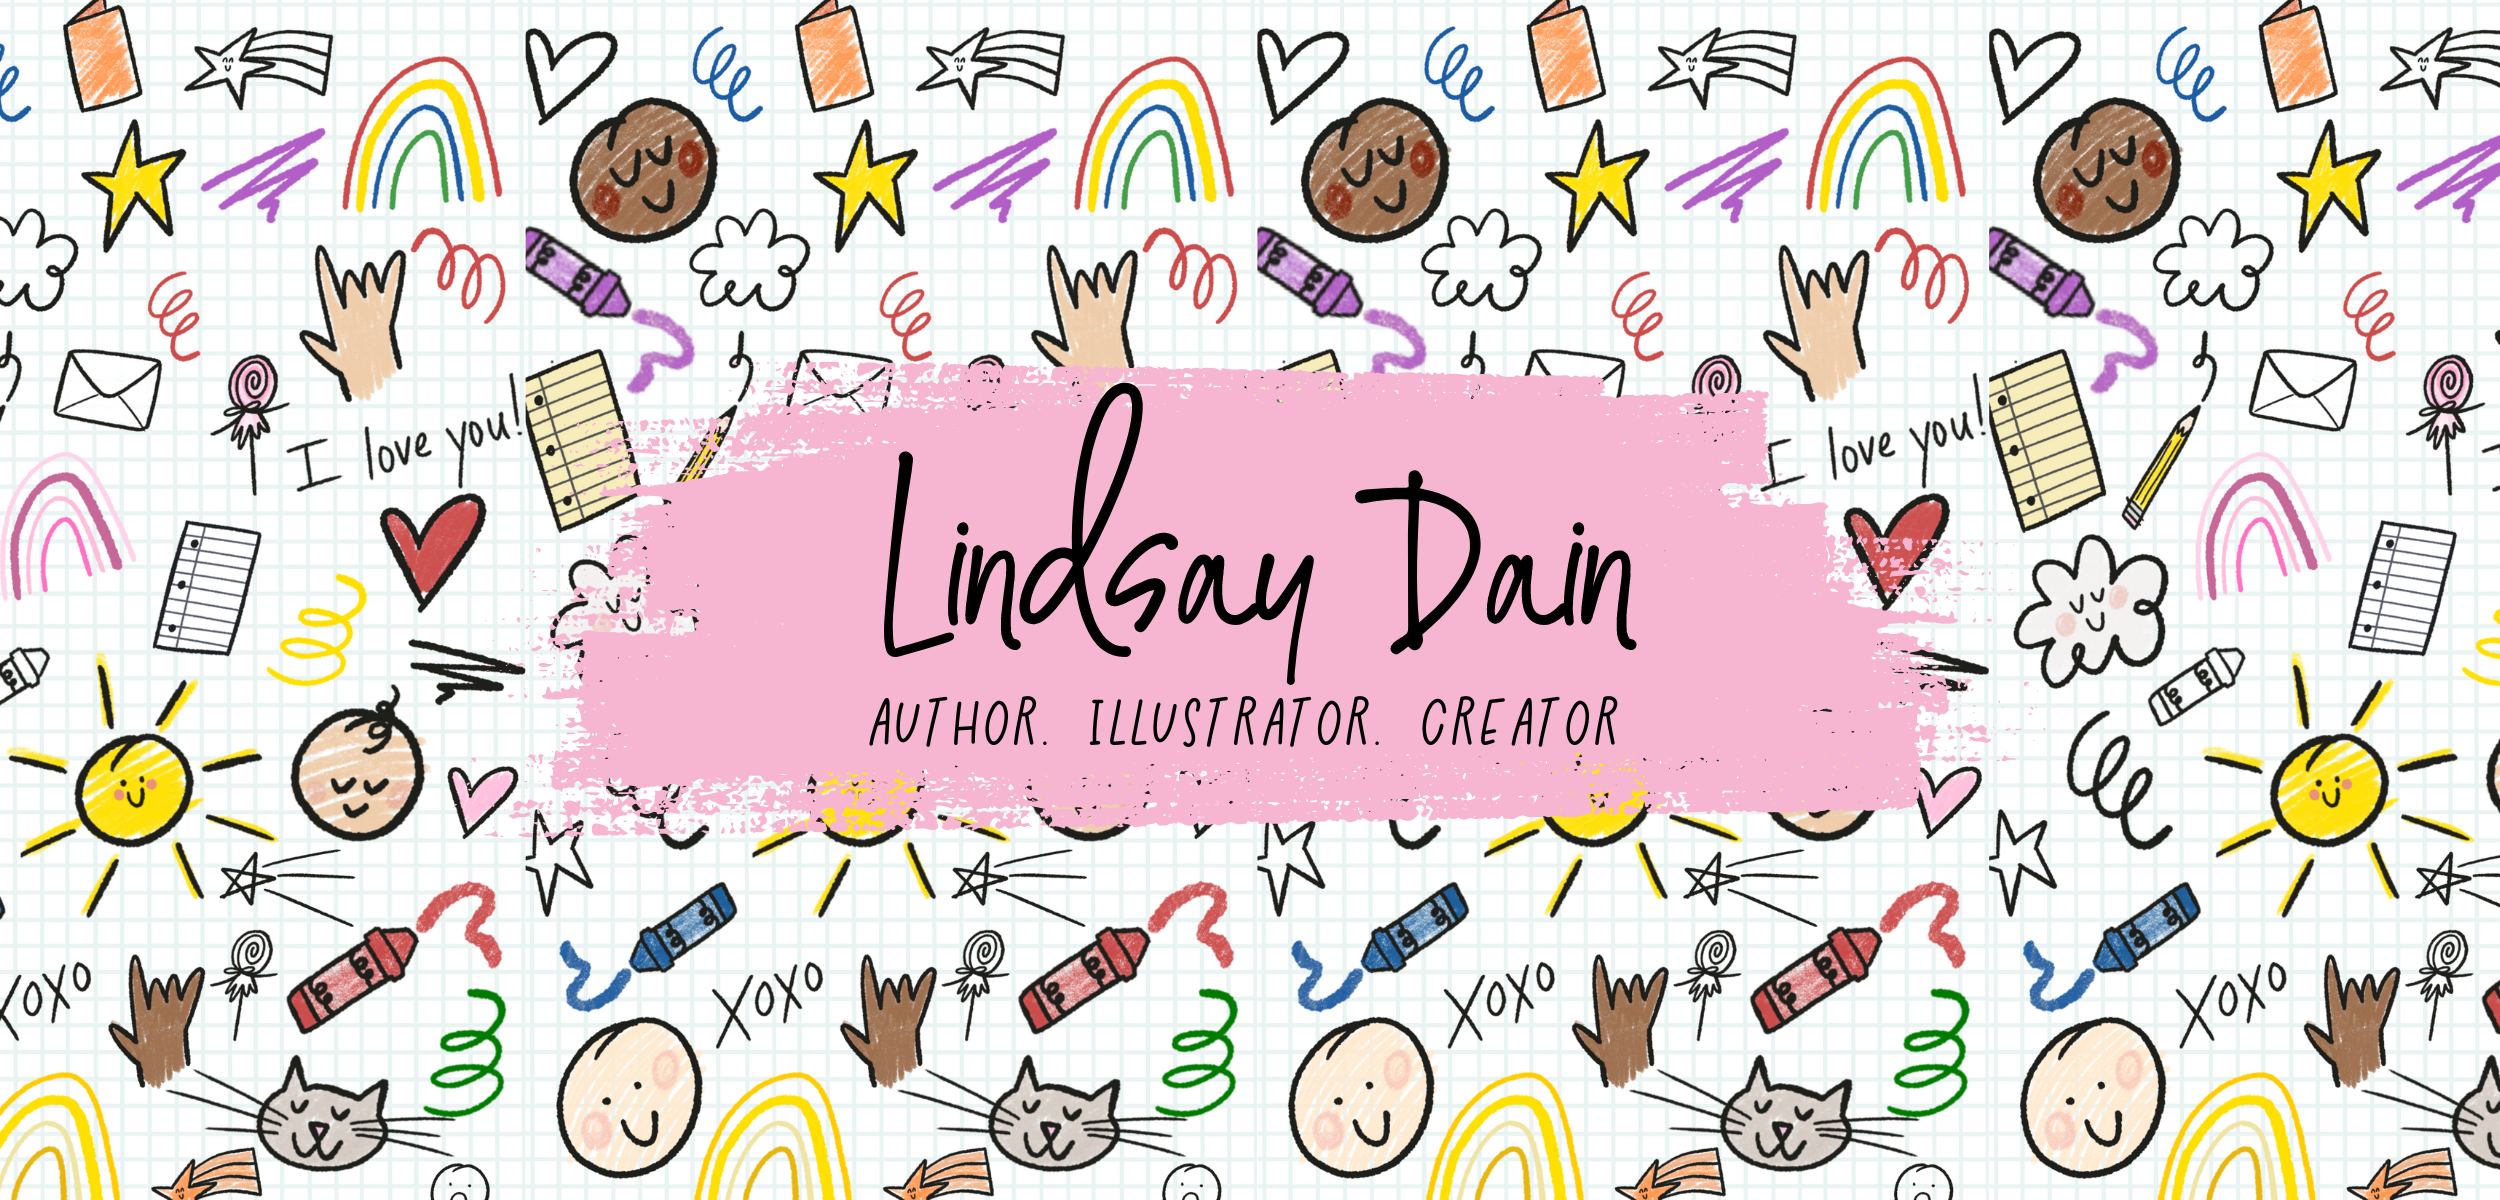 Self Published Author and Illustrator Lindsay Dain who uses Amazon KDP and Kindle Direct Publishing to pubish